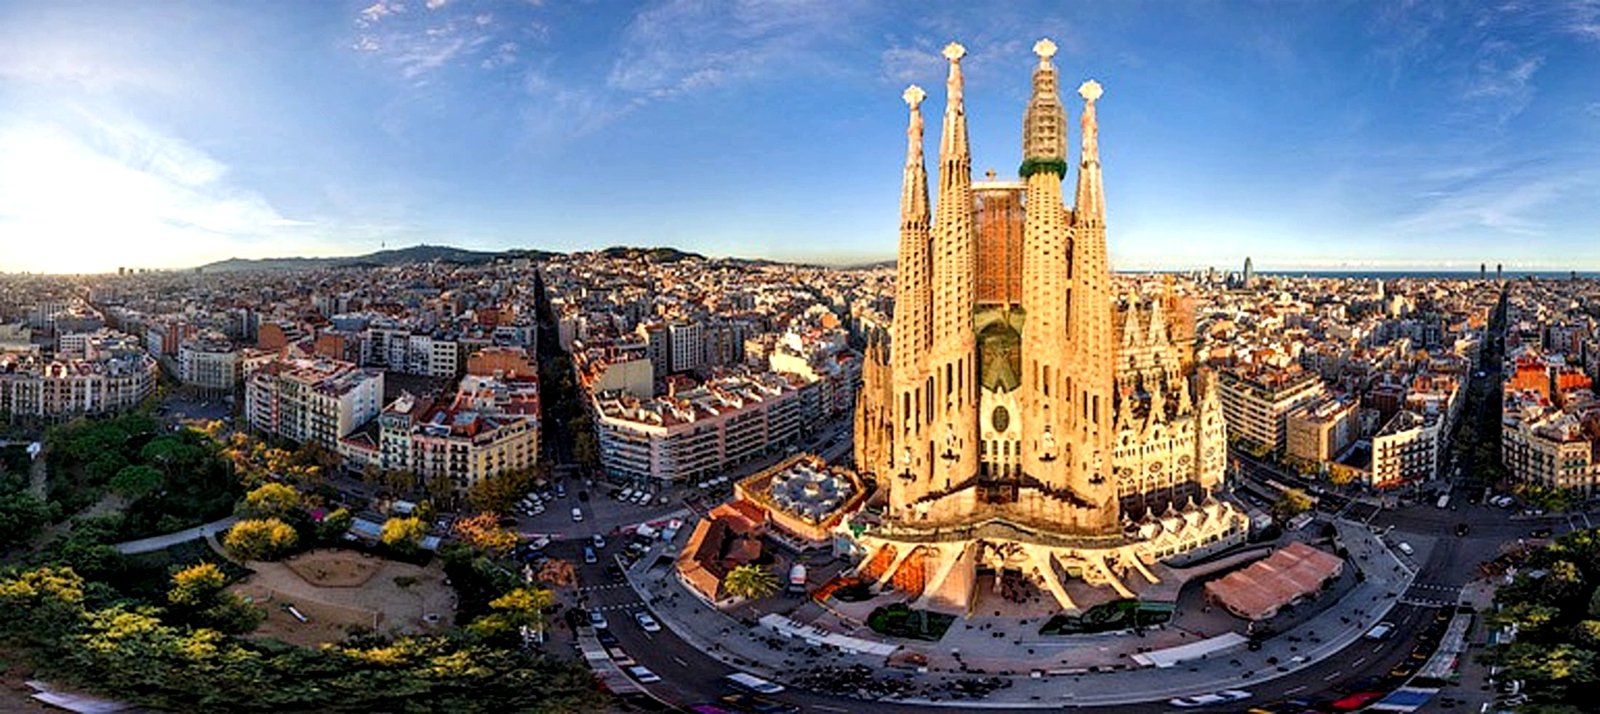 How to visit Sagrada Familia in Barcelona